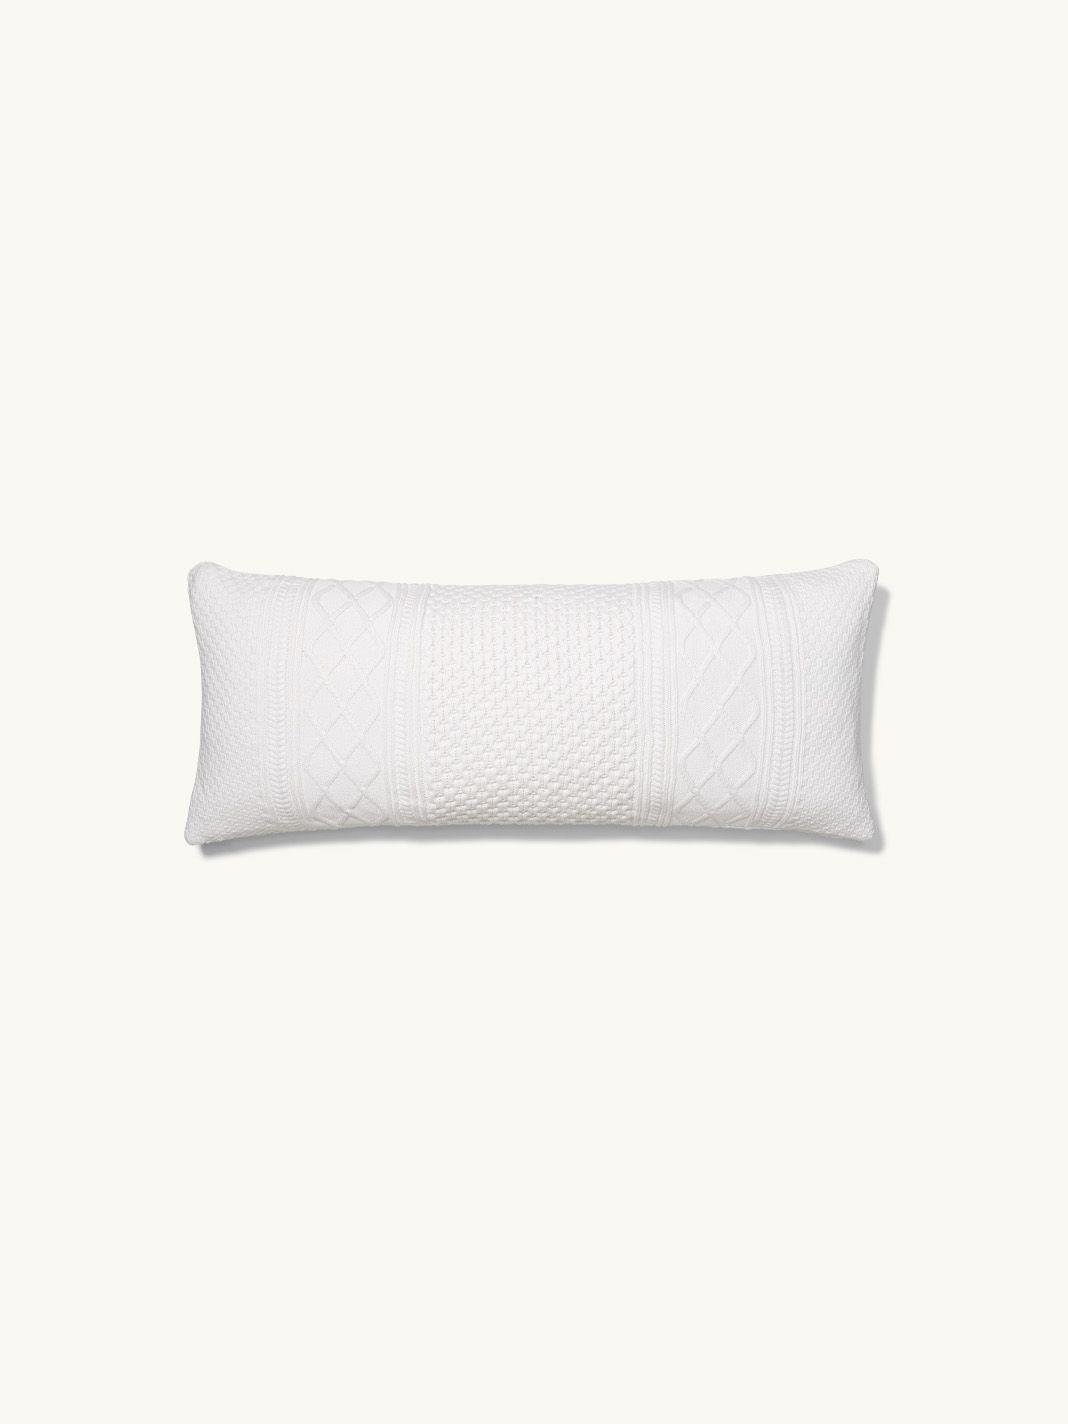 Aran Knit Pillow Cover | Boll & Branch